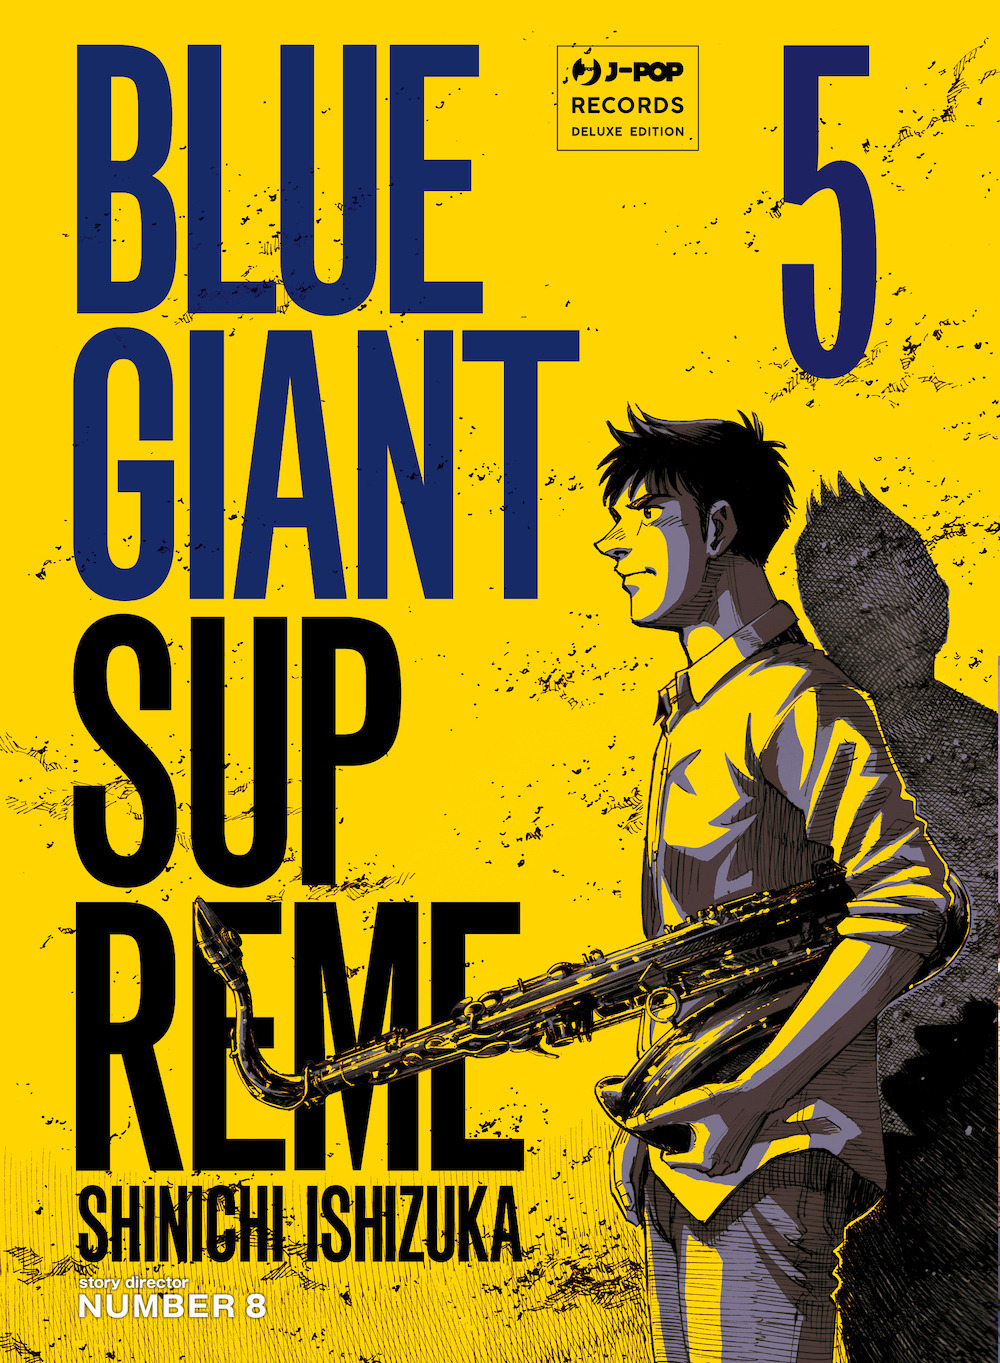 Blue giant supreme. Vol. 5